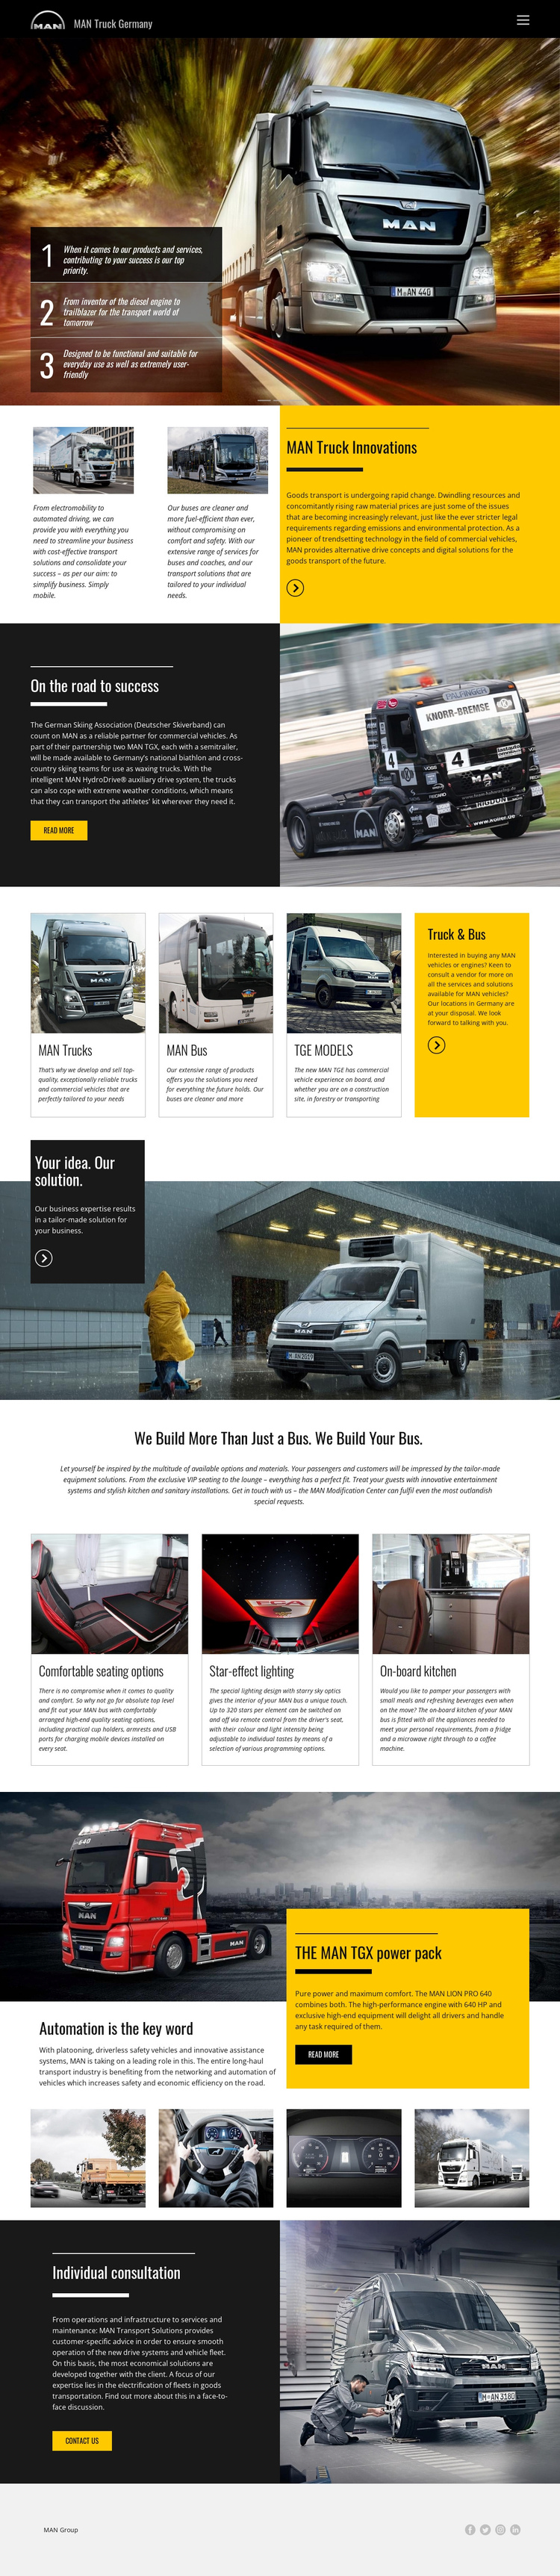 Man trucks for transportation Website Builder Software